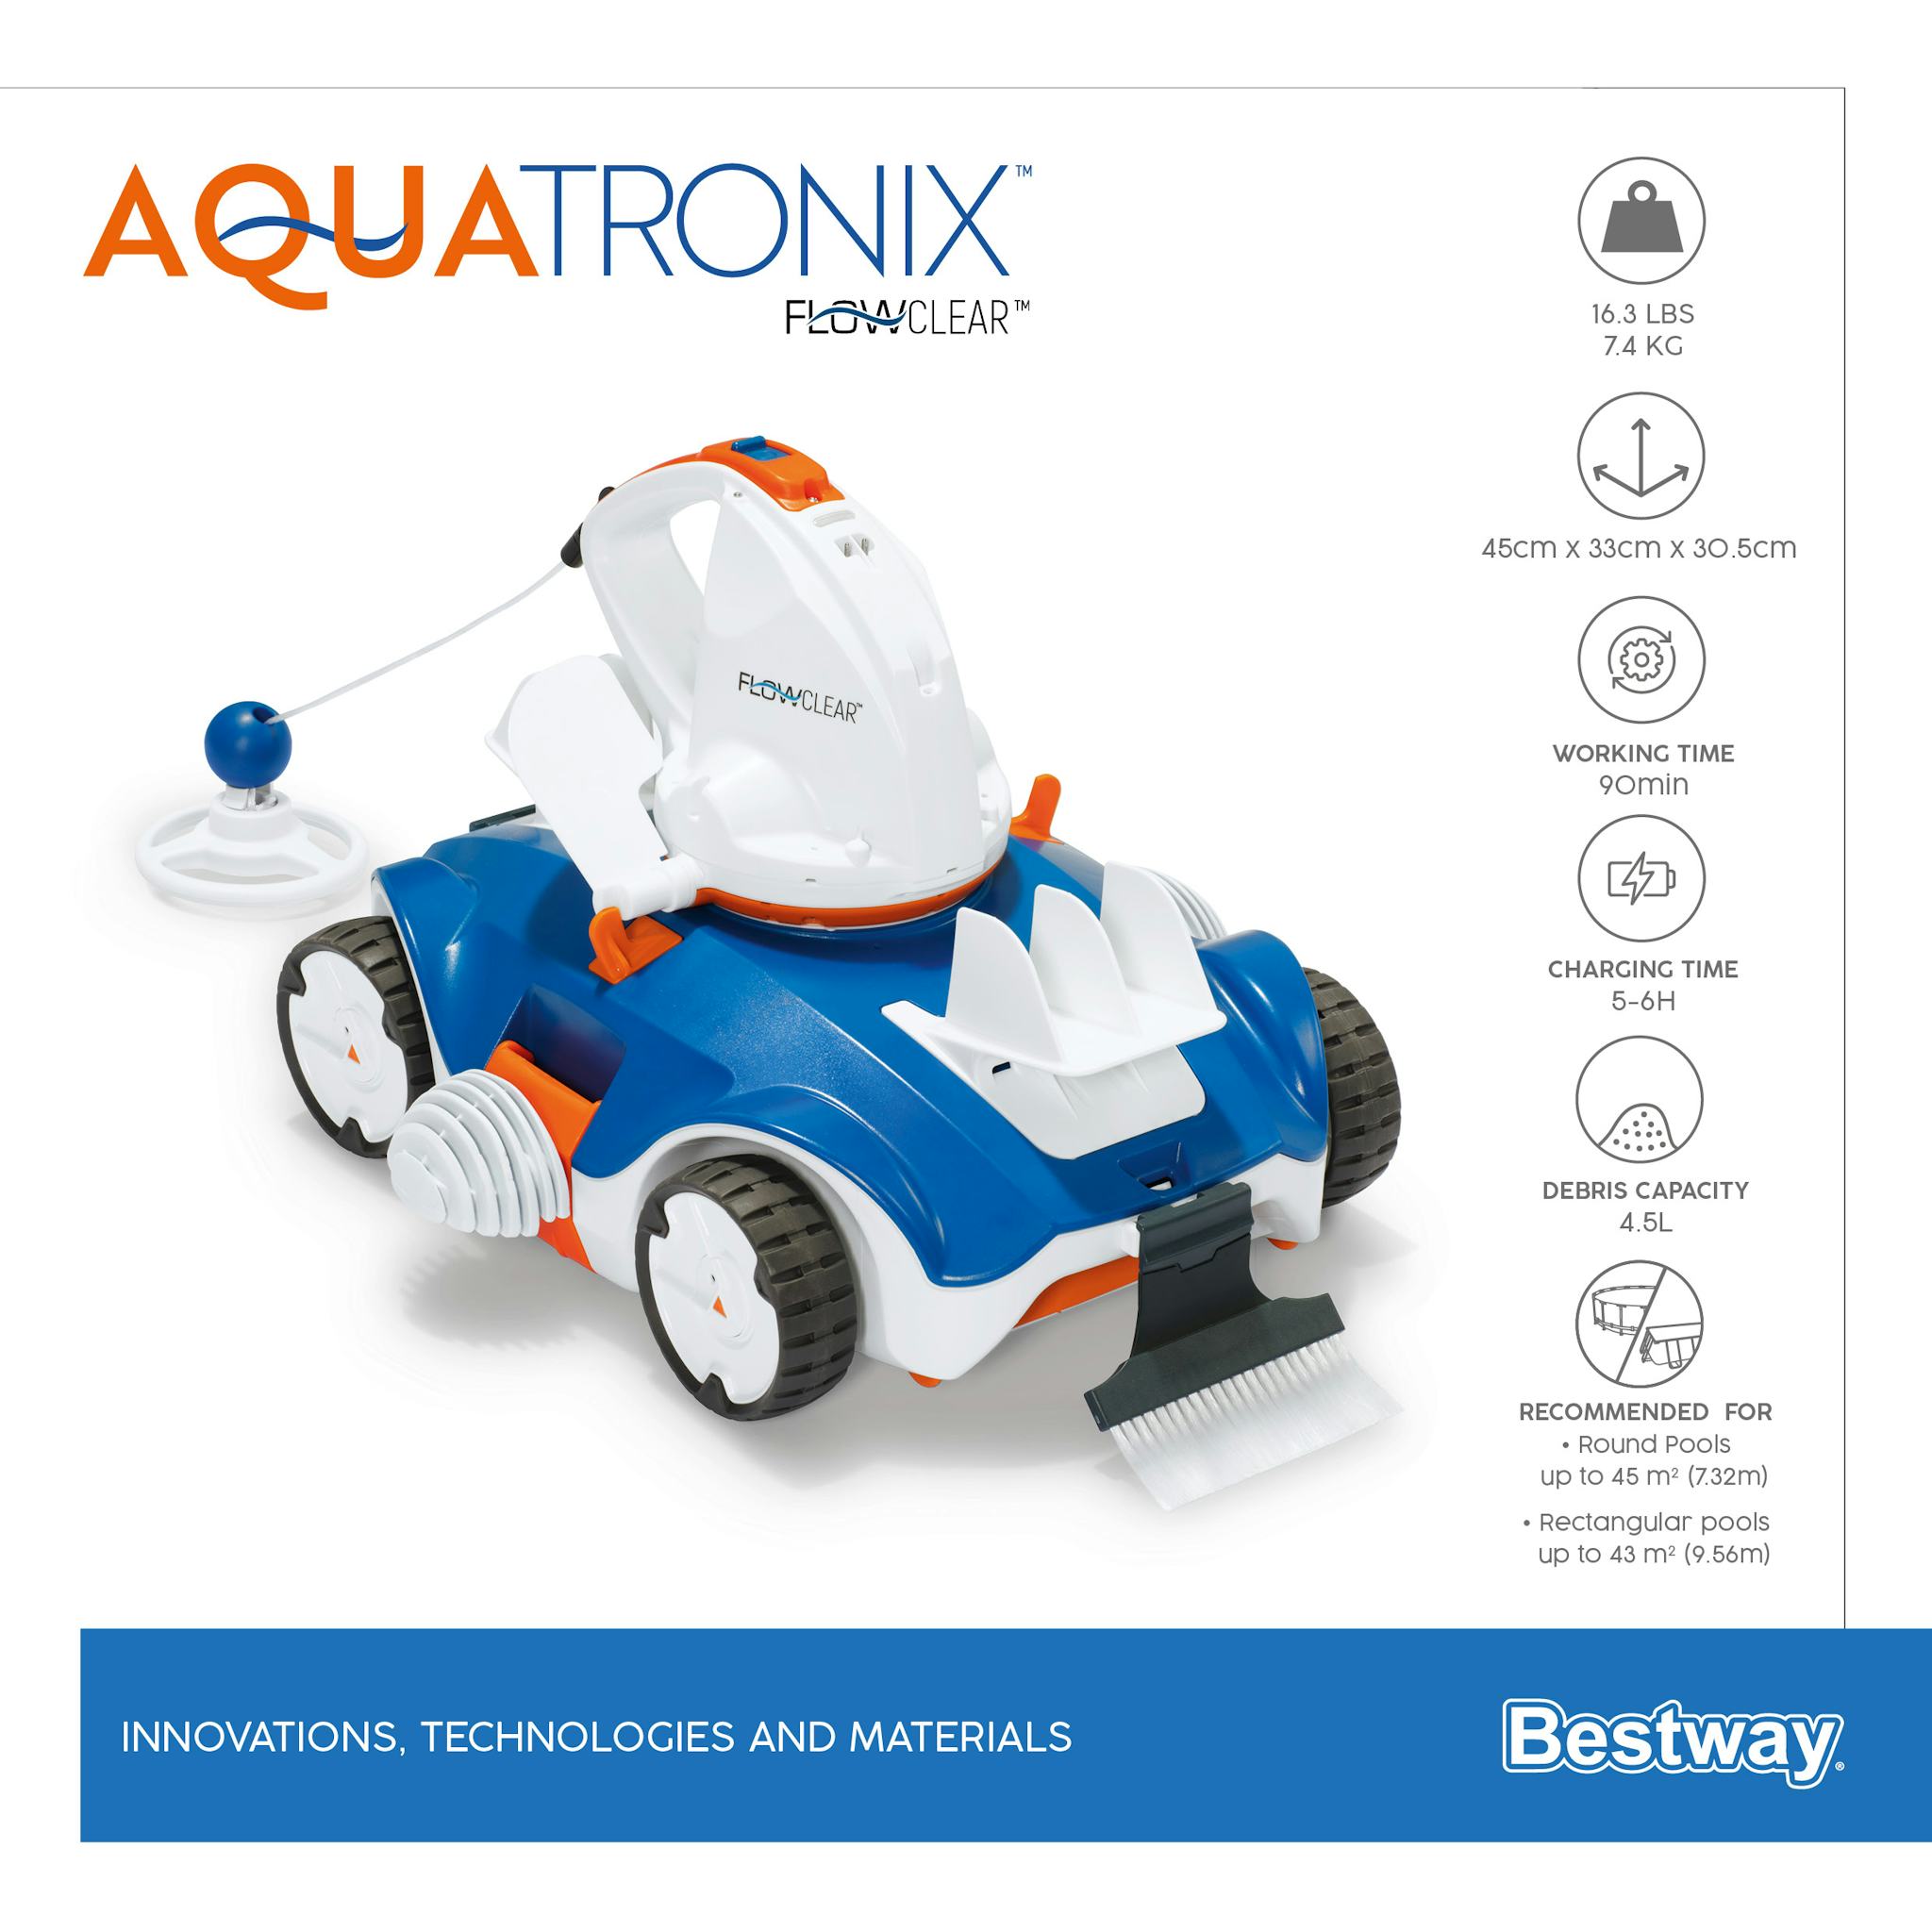 Accessori Piscine e Spa Robot per la pulizia della piscina Aquatronix Bestway 8